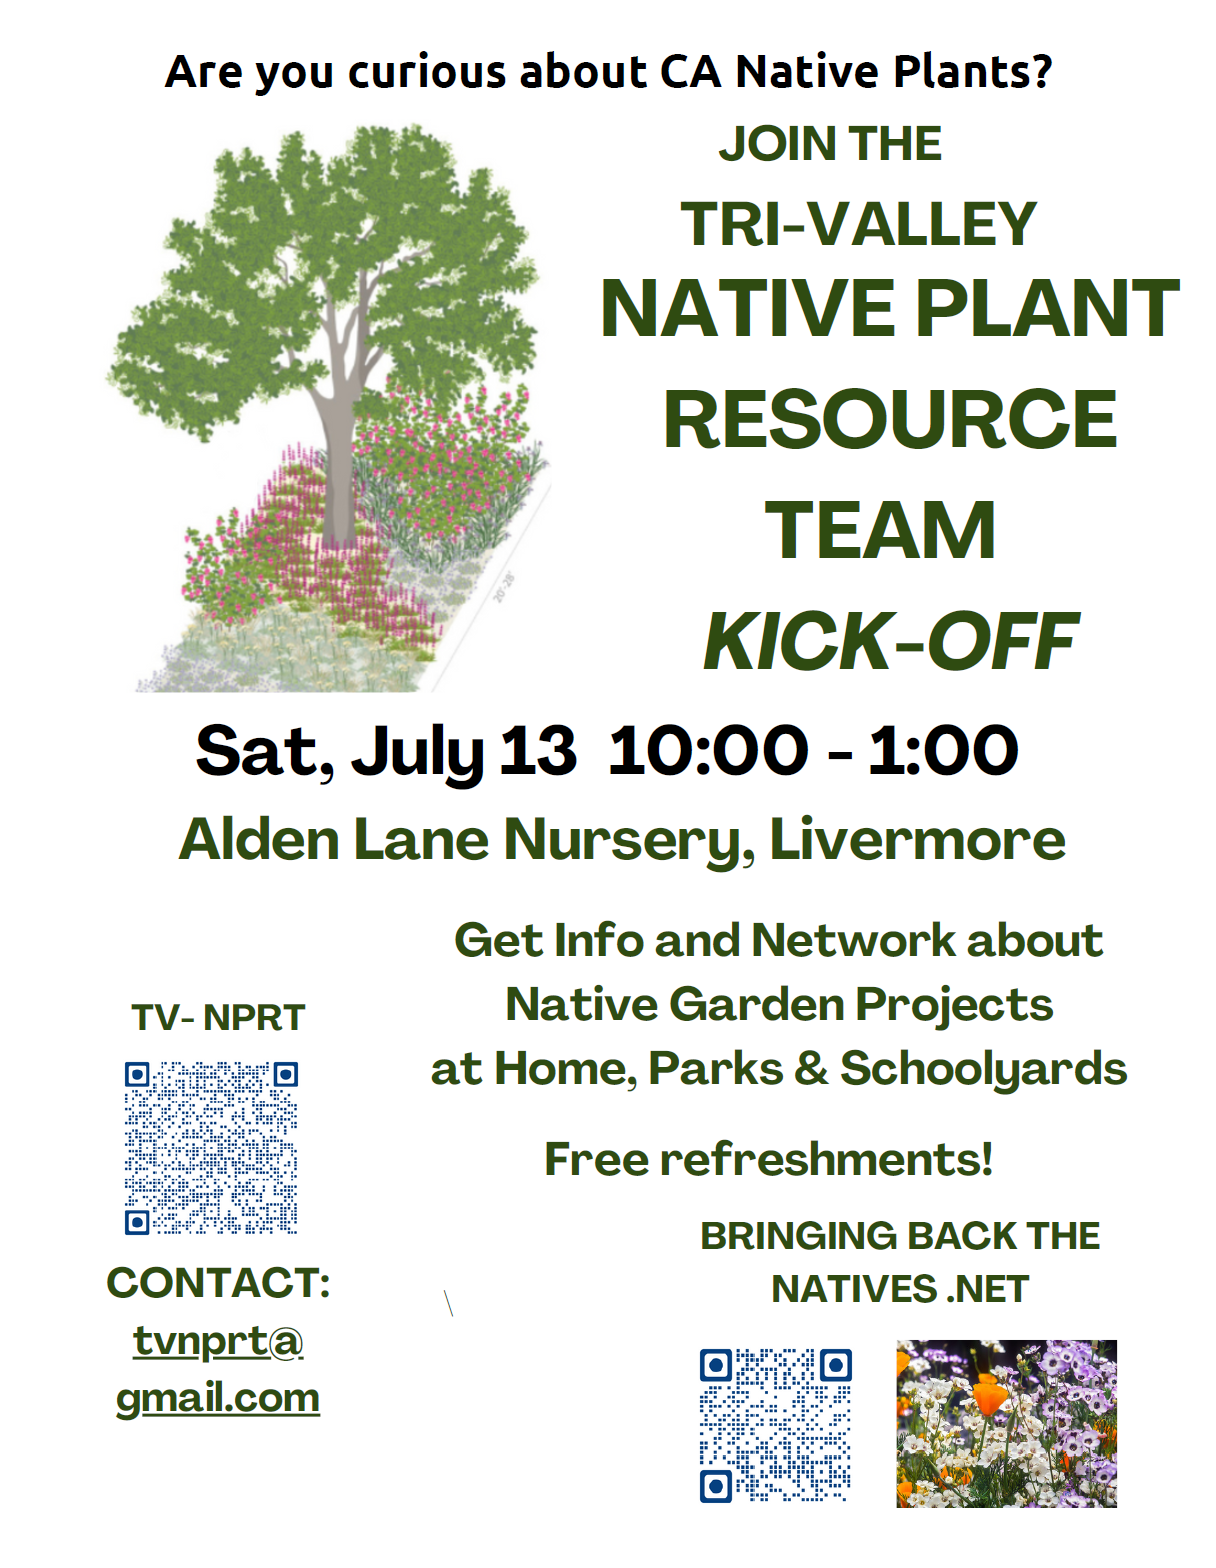 Tri-Valley Native Plant Resource Team event flyer